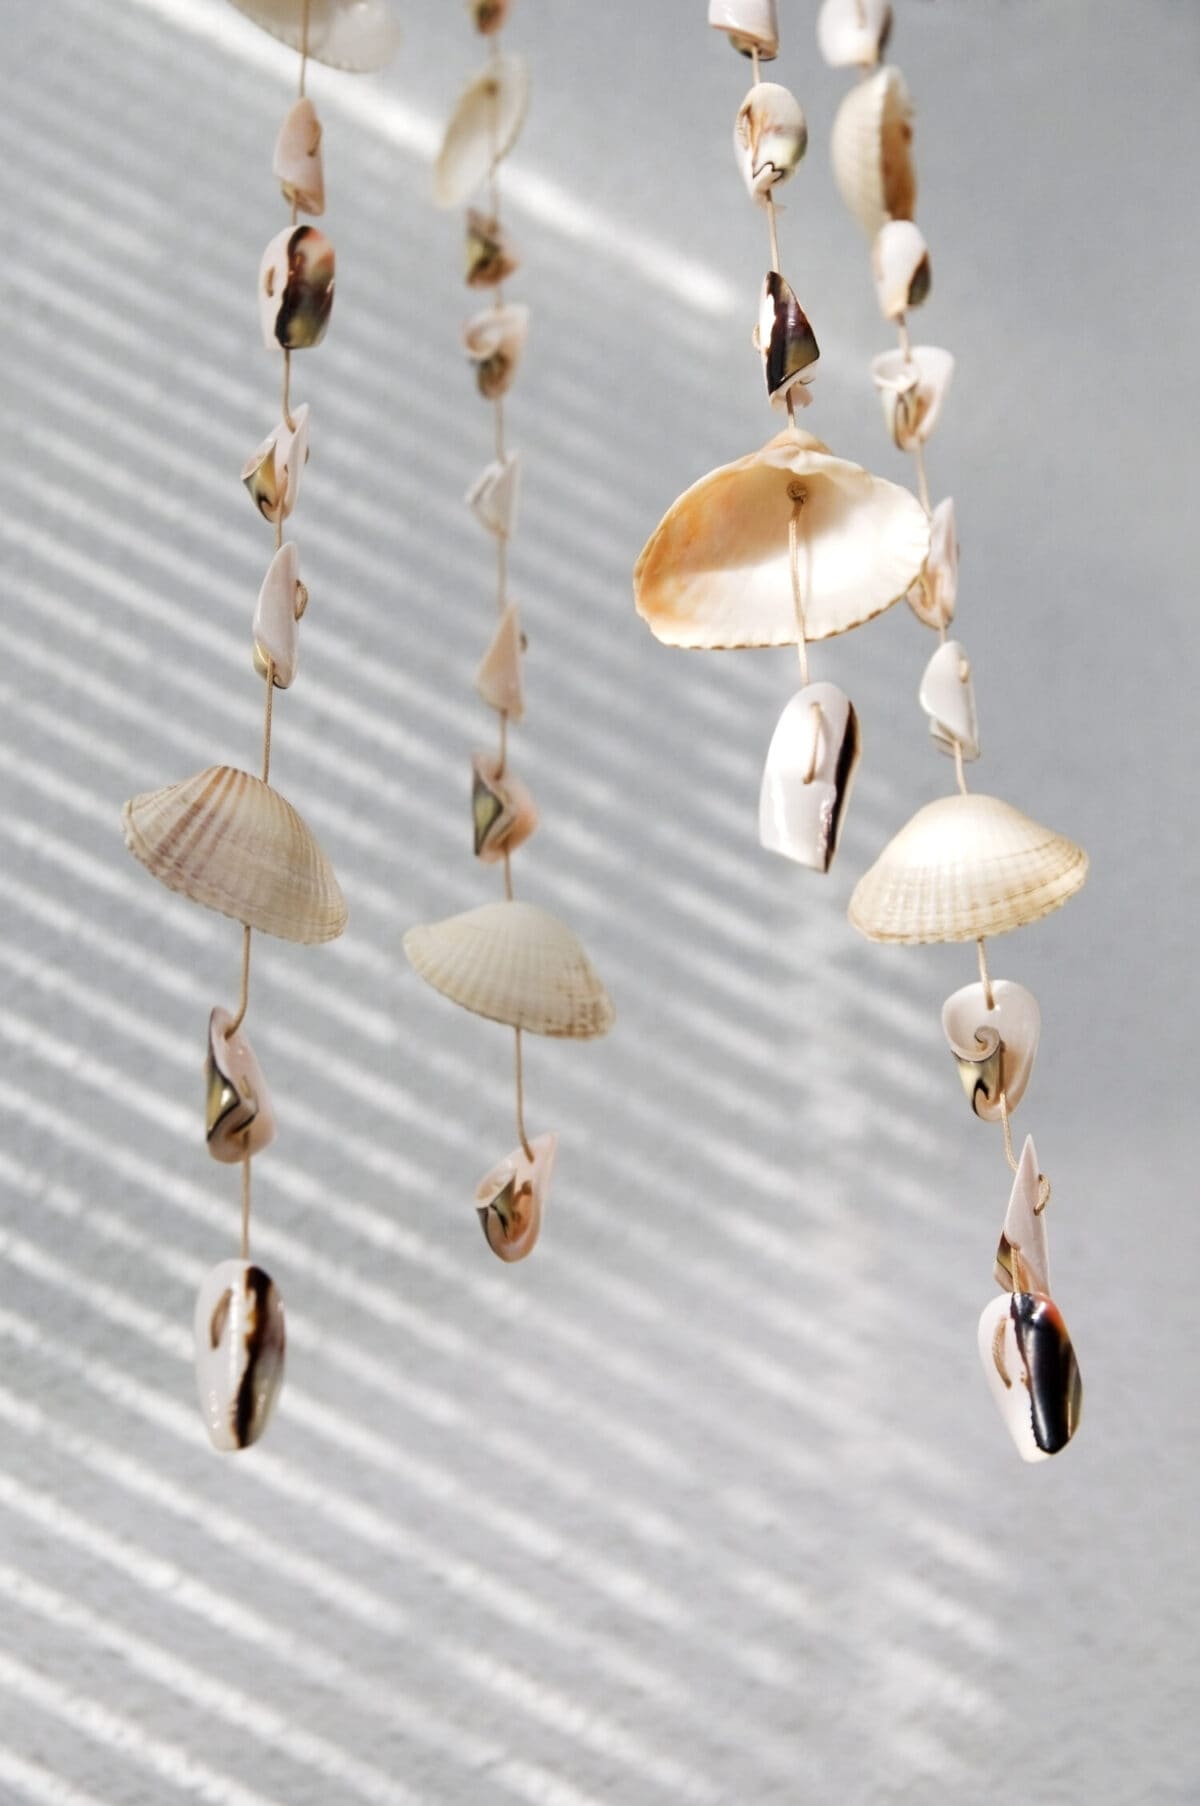 Handmade wind chimes (mobile) of seashells in sunlight